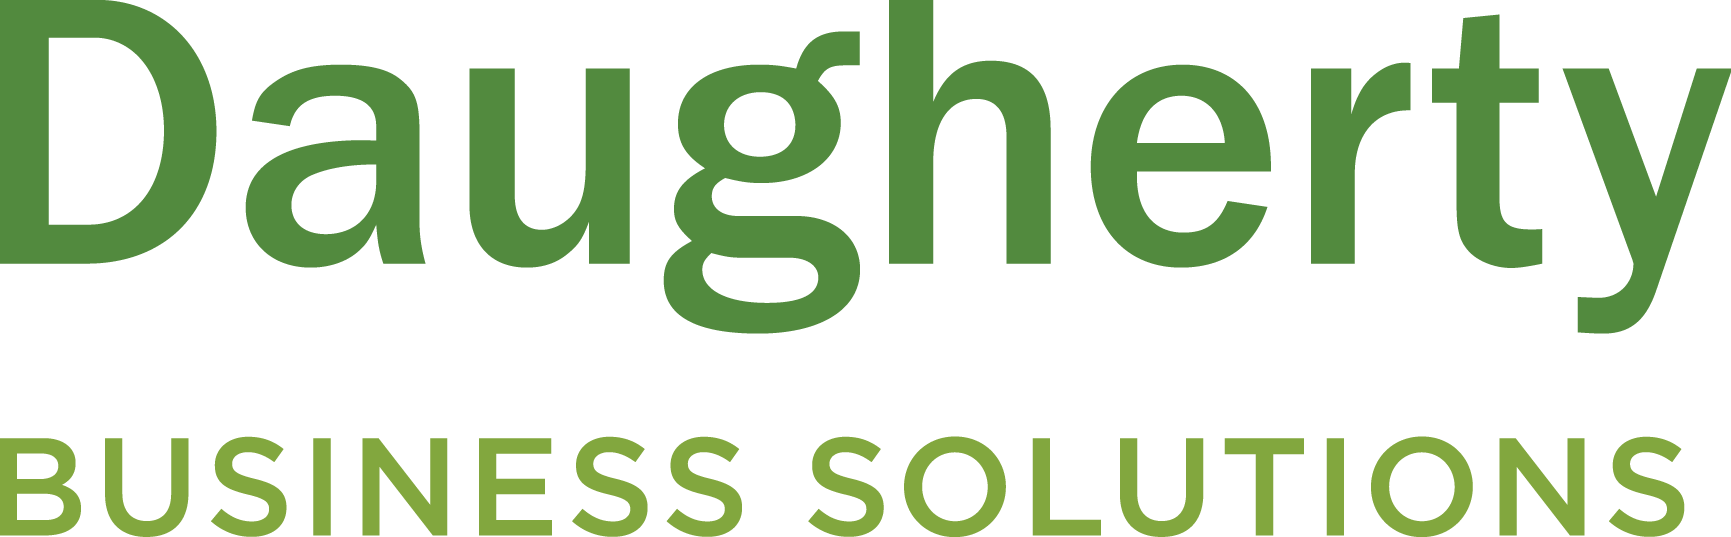 Daugherty_Logo